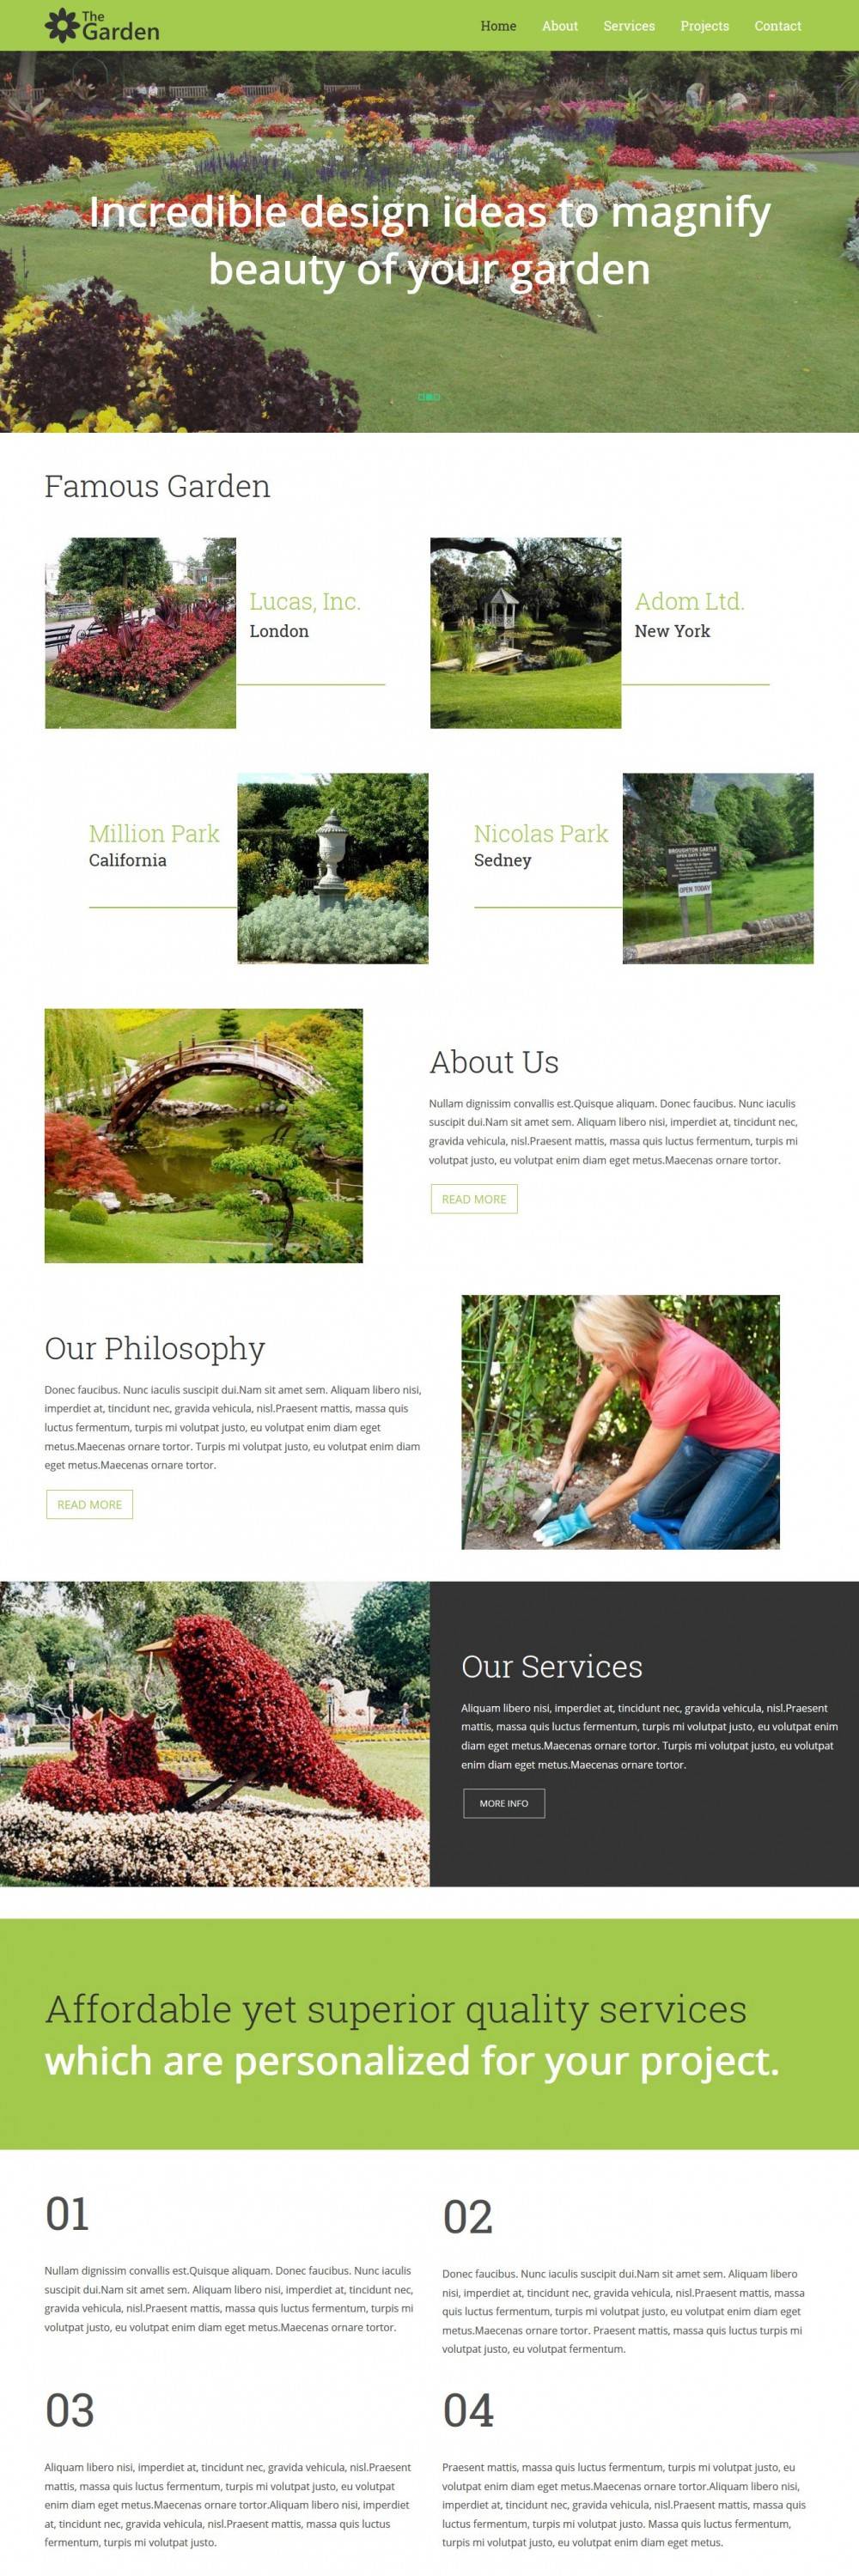 garden service business plan